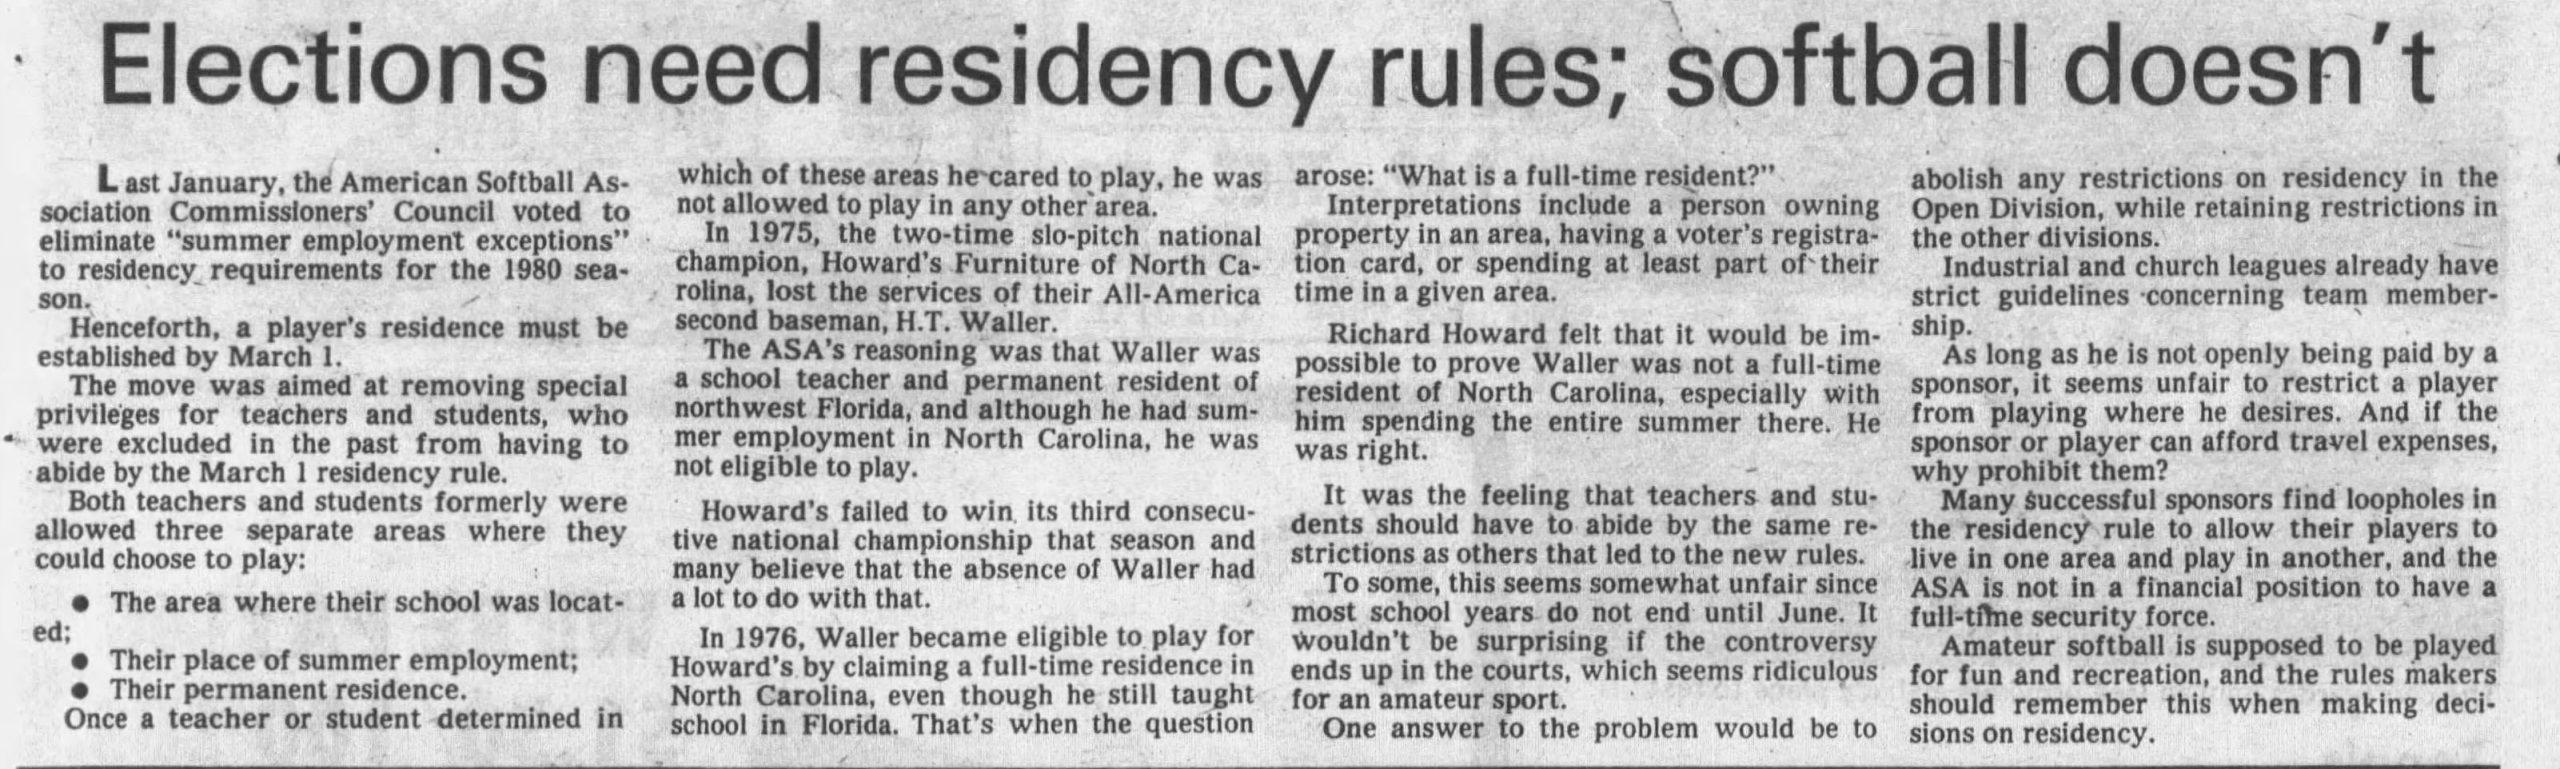 1979 Miami News Residency Rule